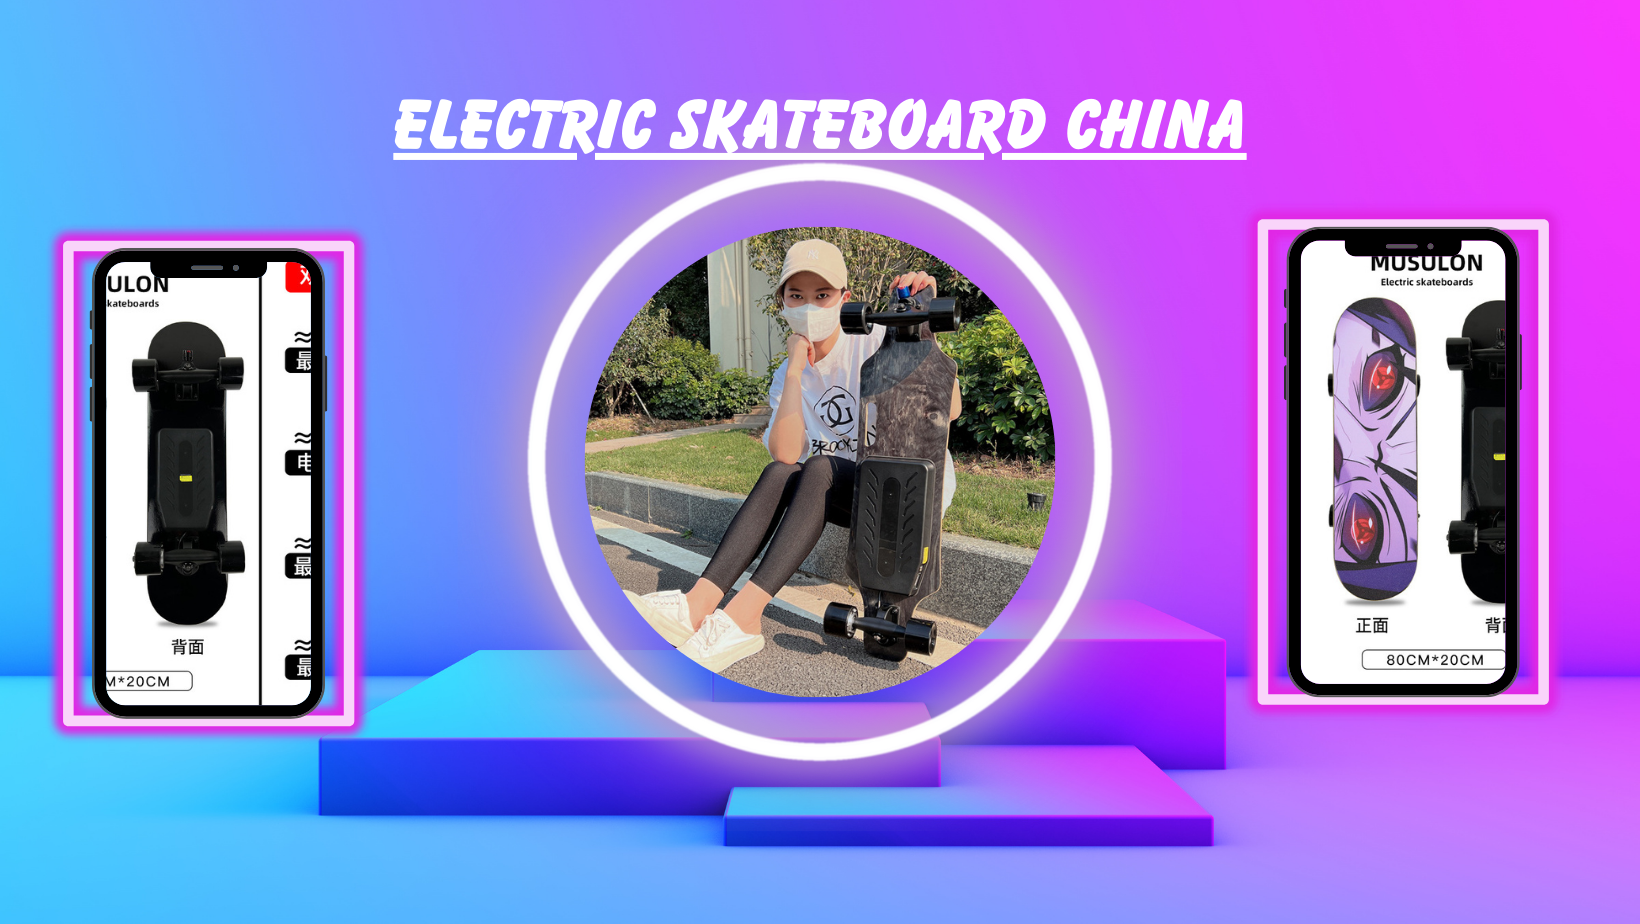 Importing Electric Skateboard China to Malaysia